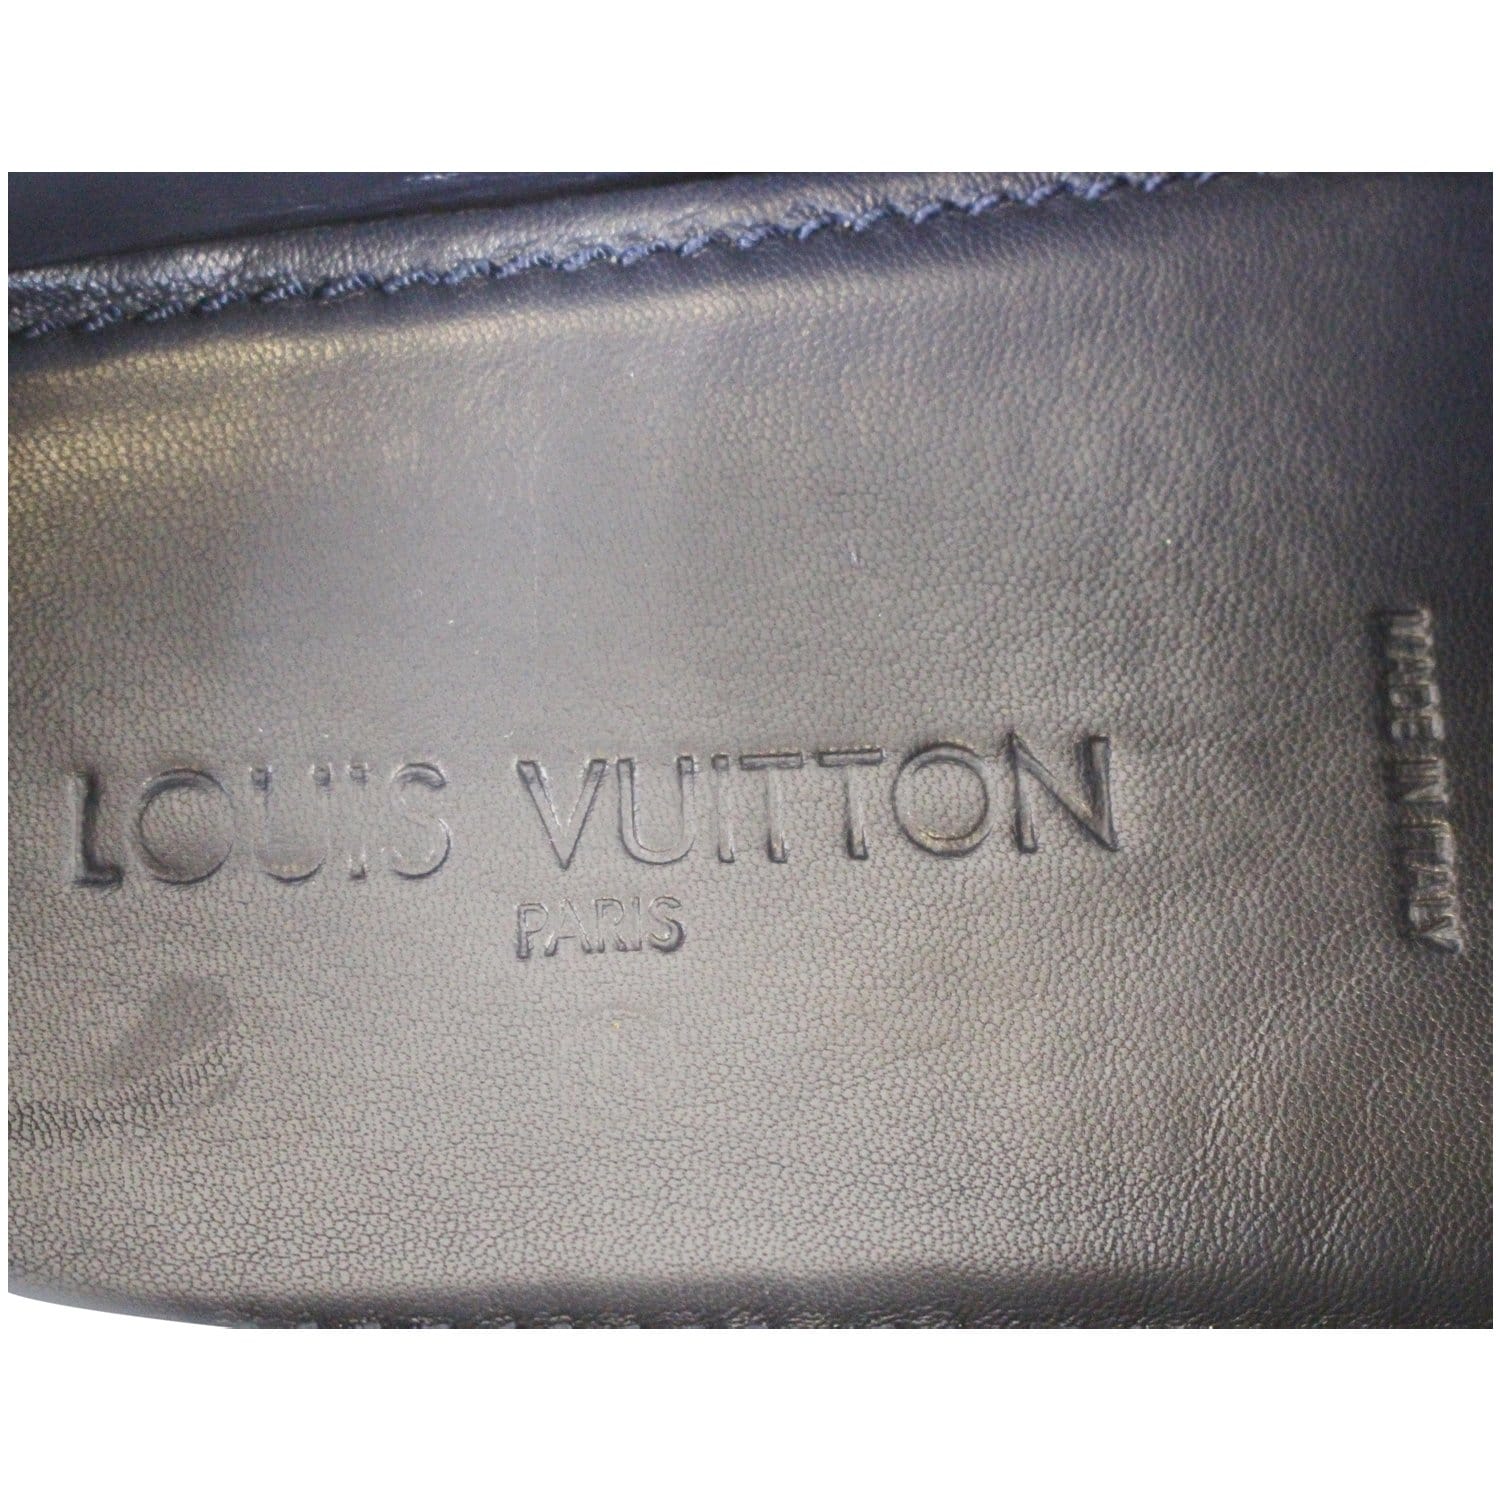 Louis Vuitton Padlock – de muse